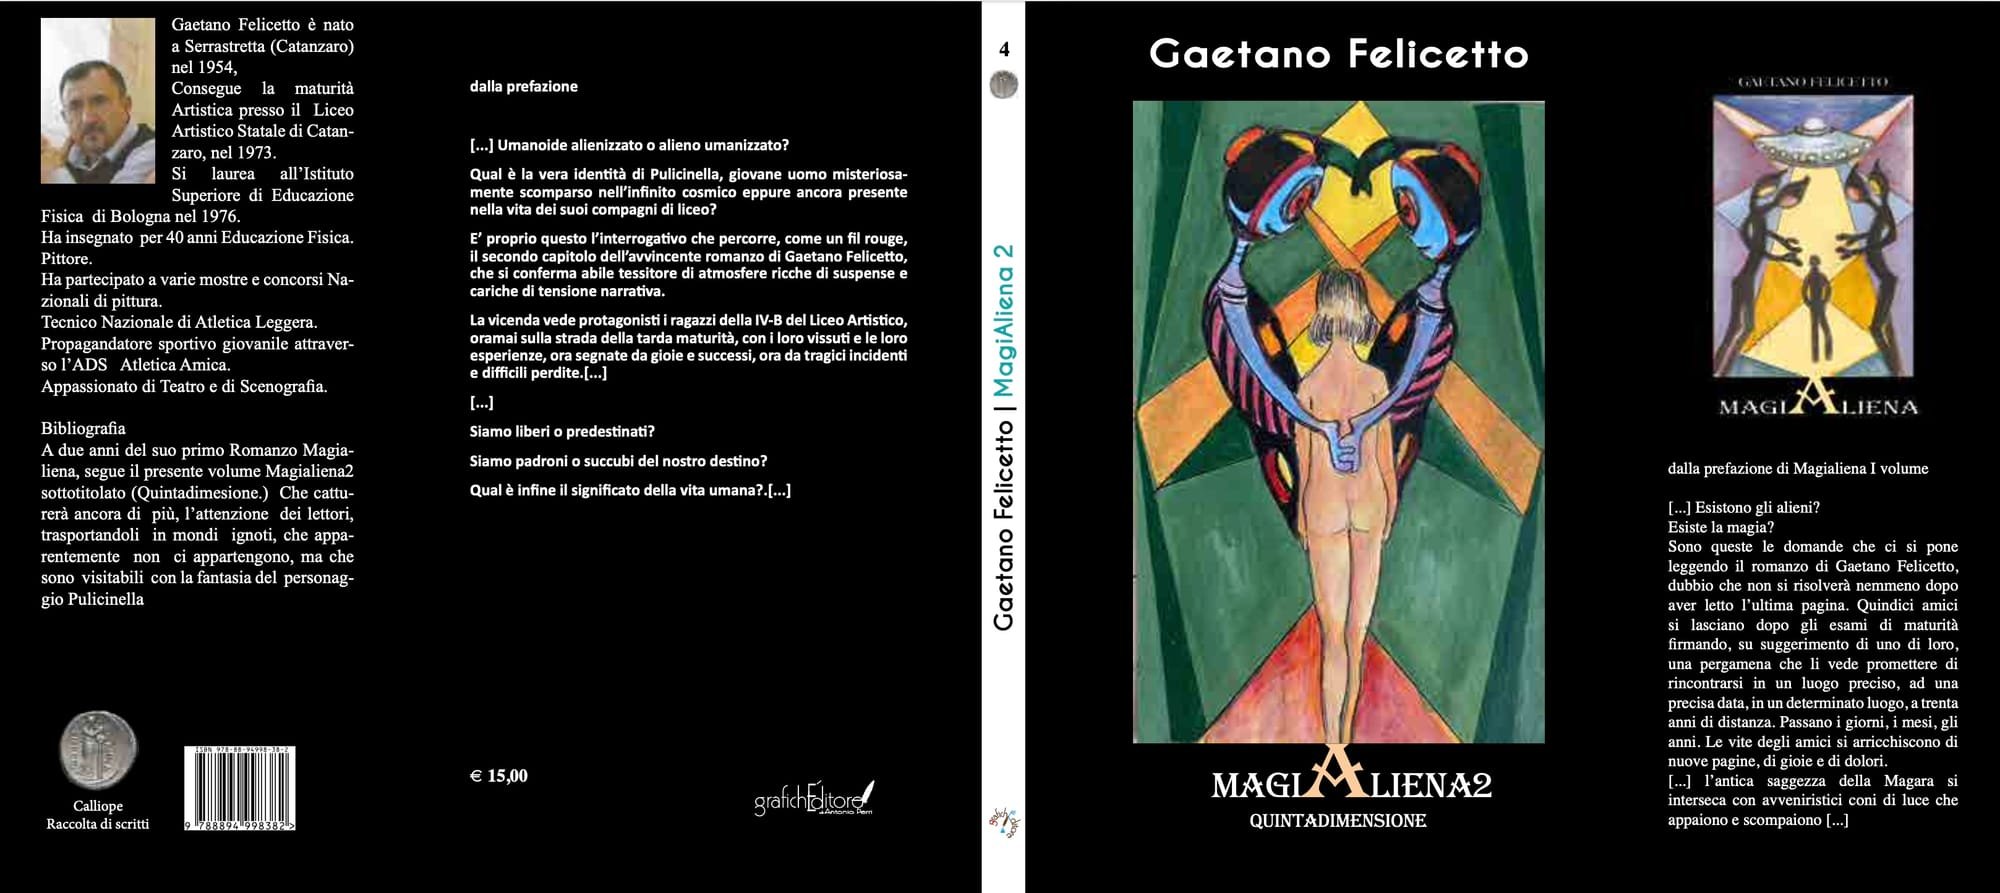 Magialiena2 - Quintadimensione di Gaetano Felicetto - prossima uscita